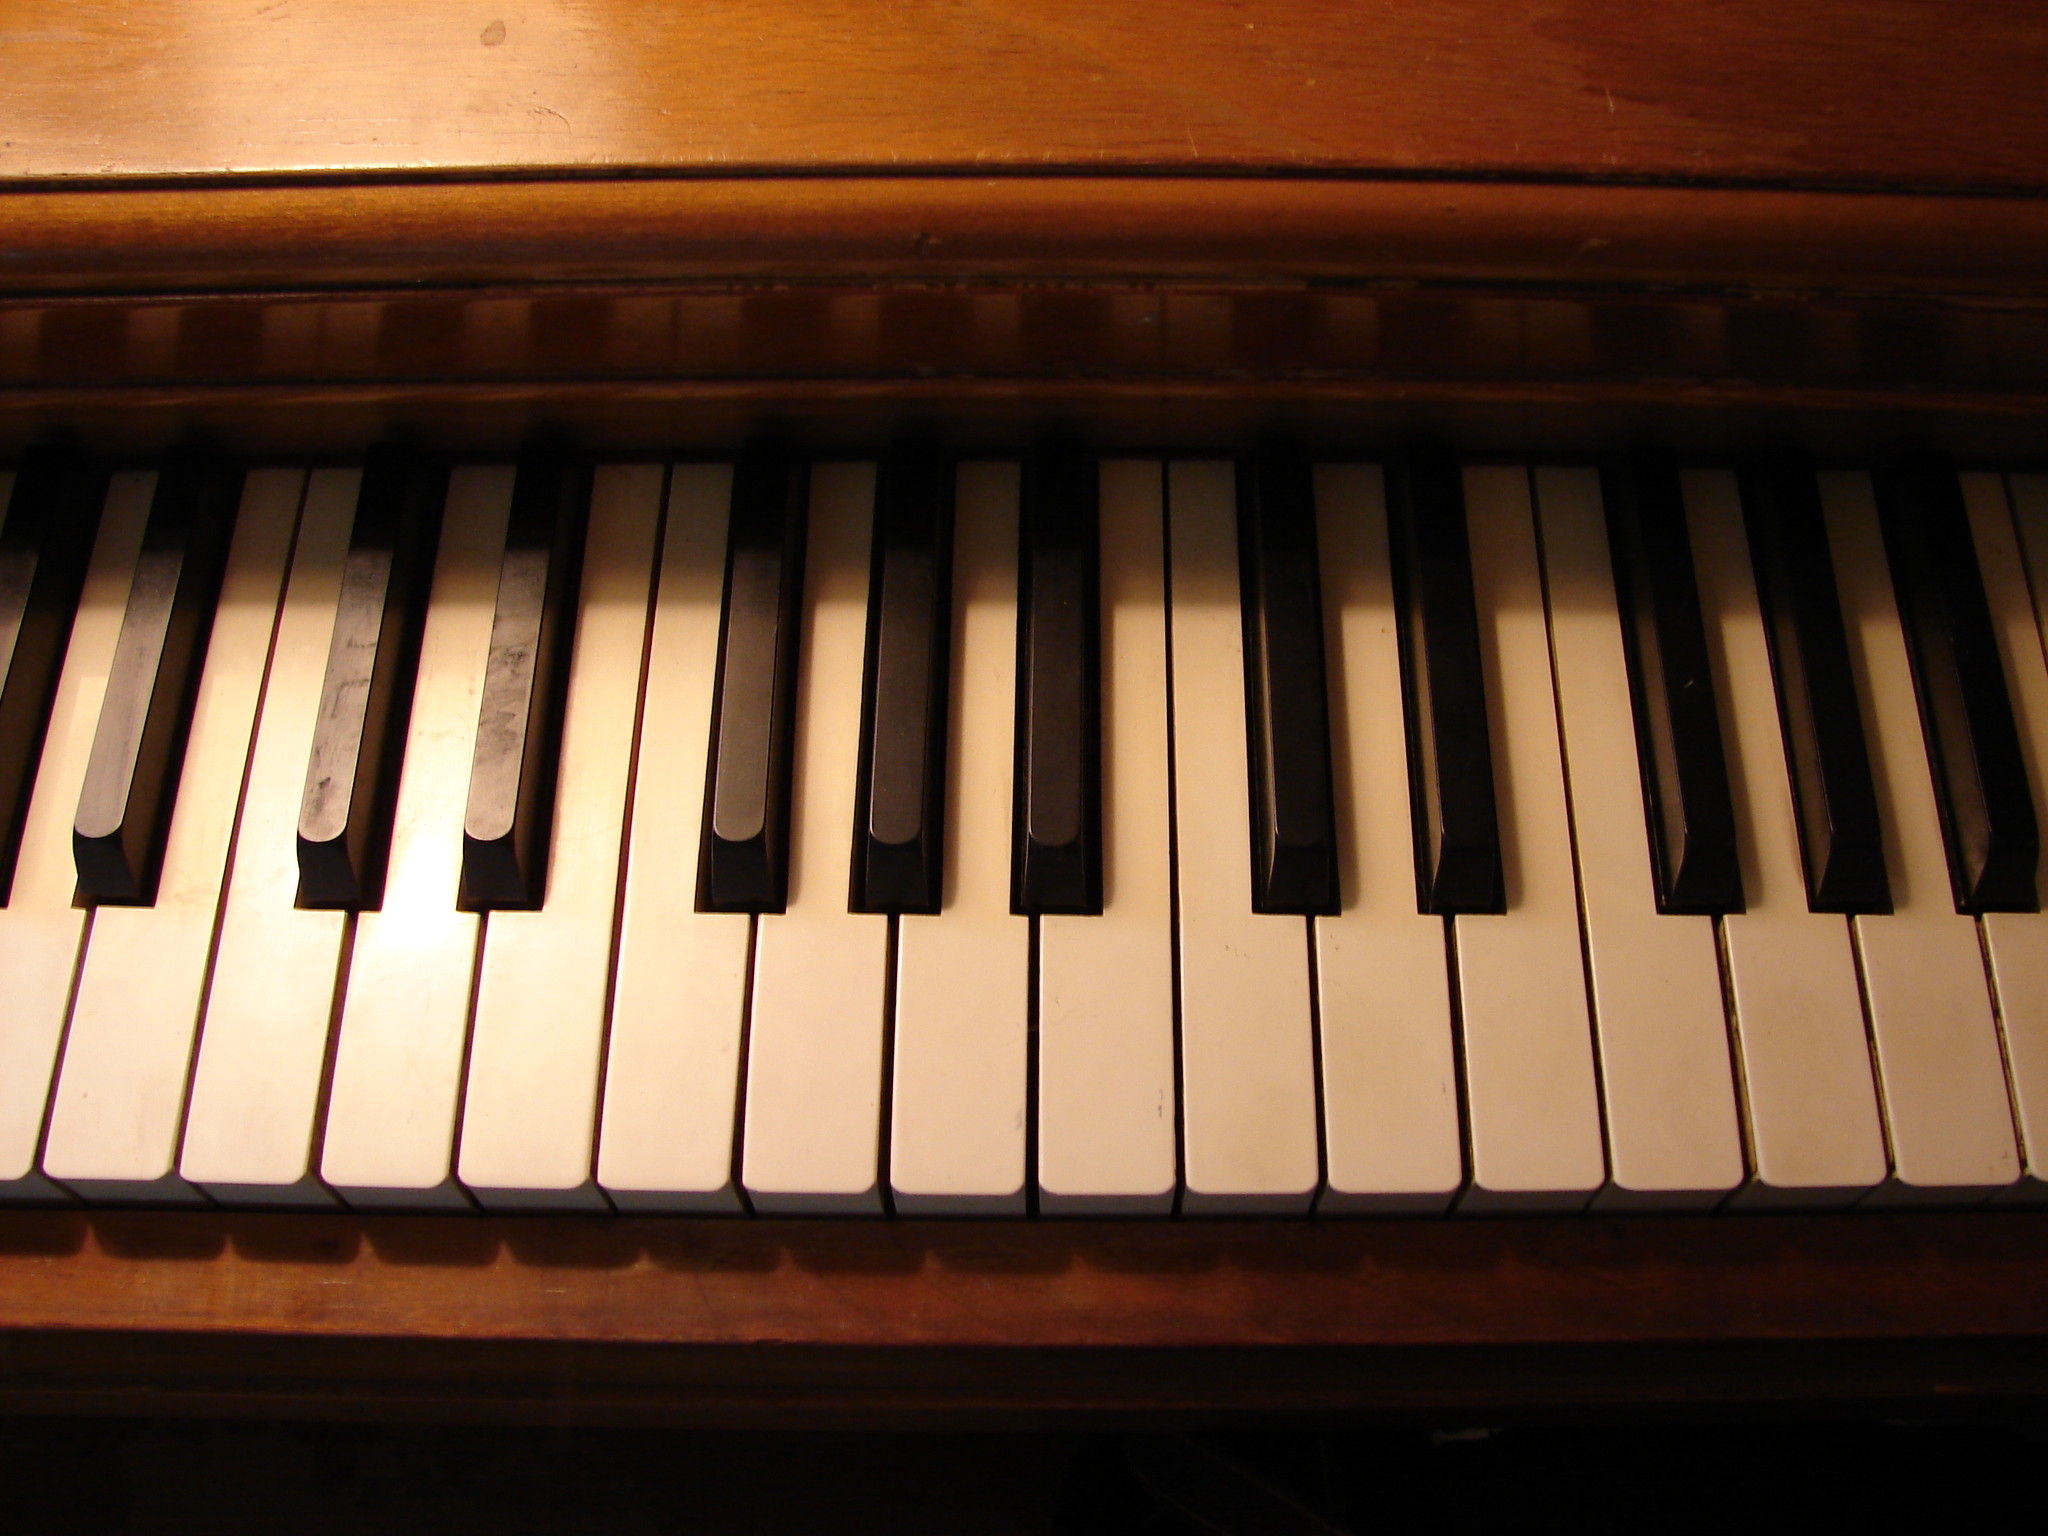 Фото октав. Пианино. Клавиши фортепиано. Фортепиано. Клавиши фортепьяно.